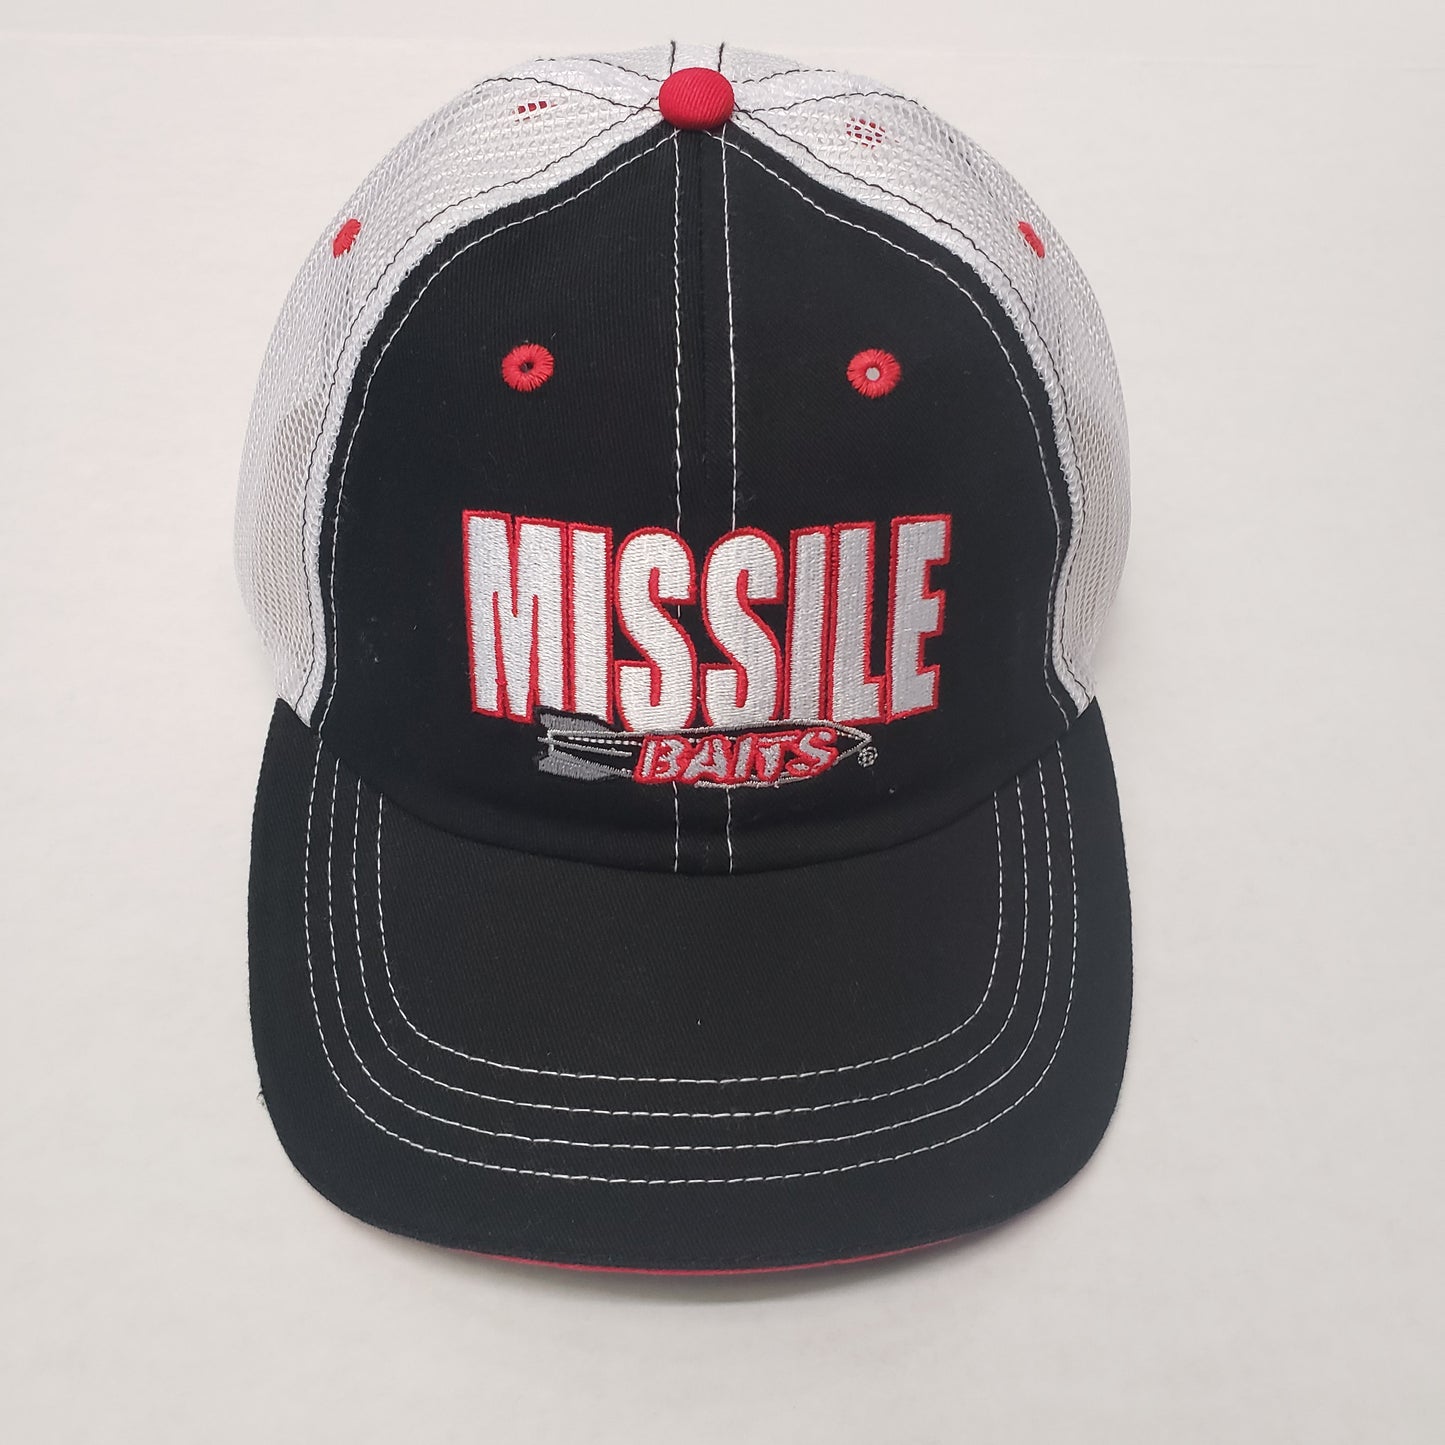 Missile Baits Hat/ Trucker/ Adjustable Black/ White/ Black